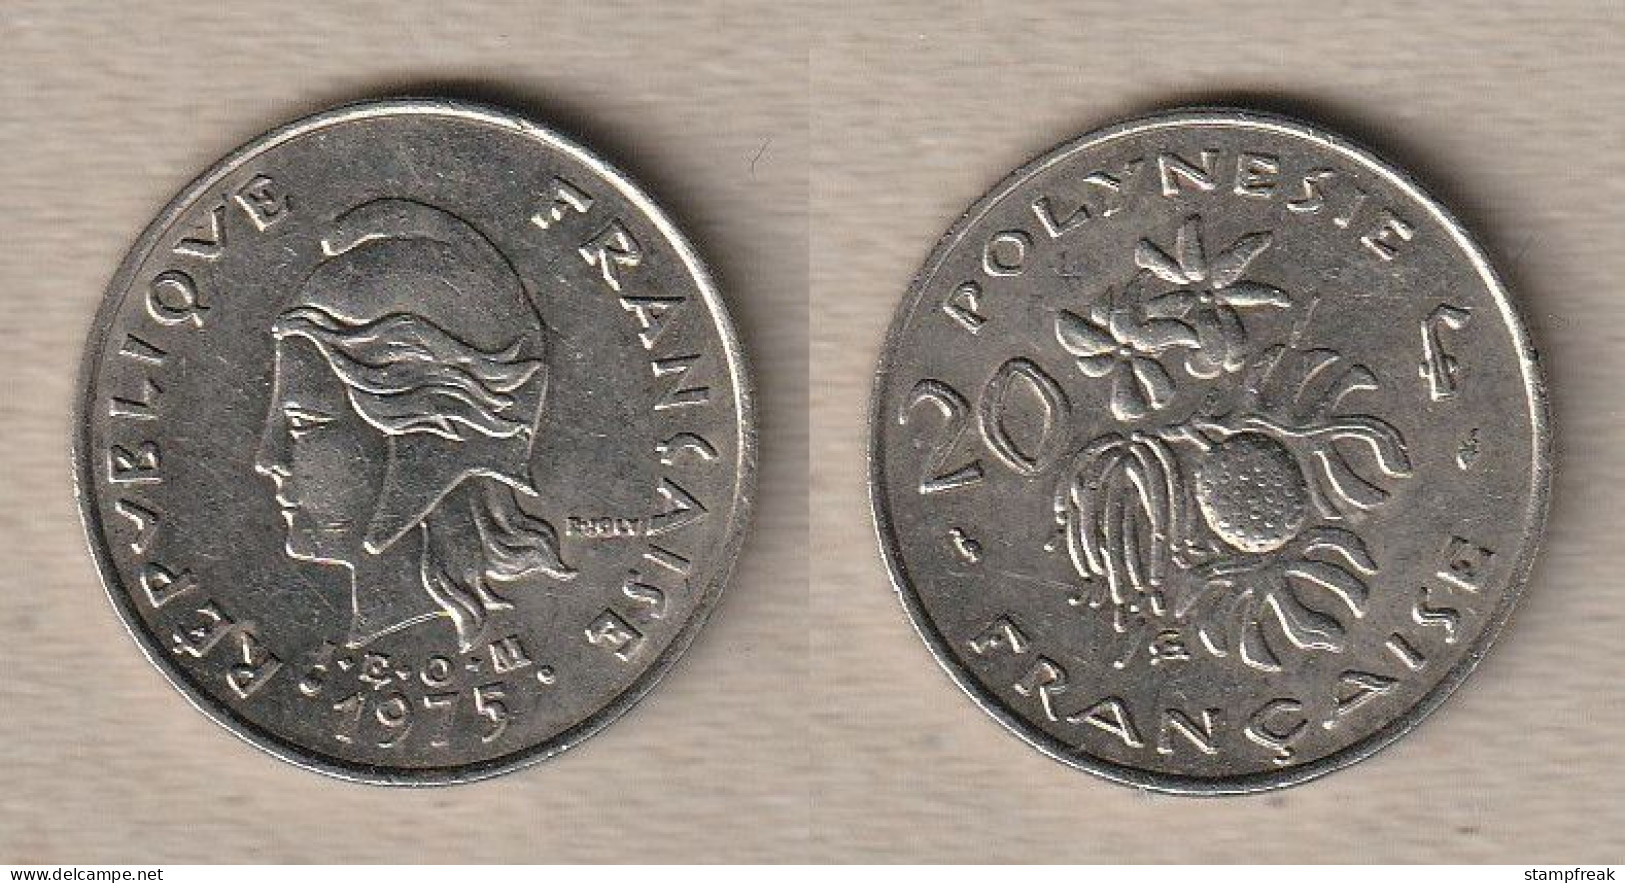 02399) Französisch-Polynesien, 20 Francs 1975 - Polinesia Francesa